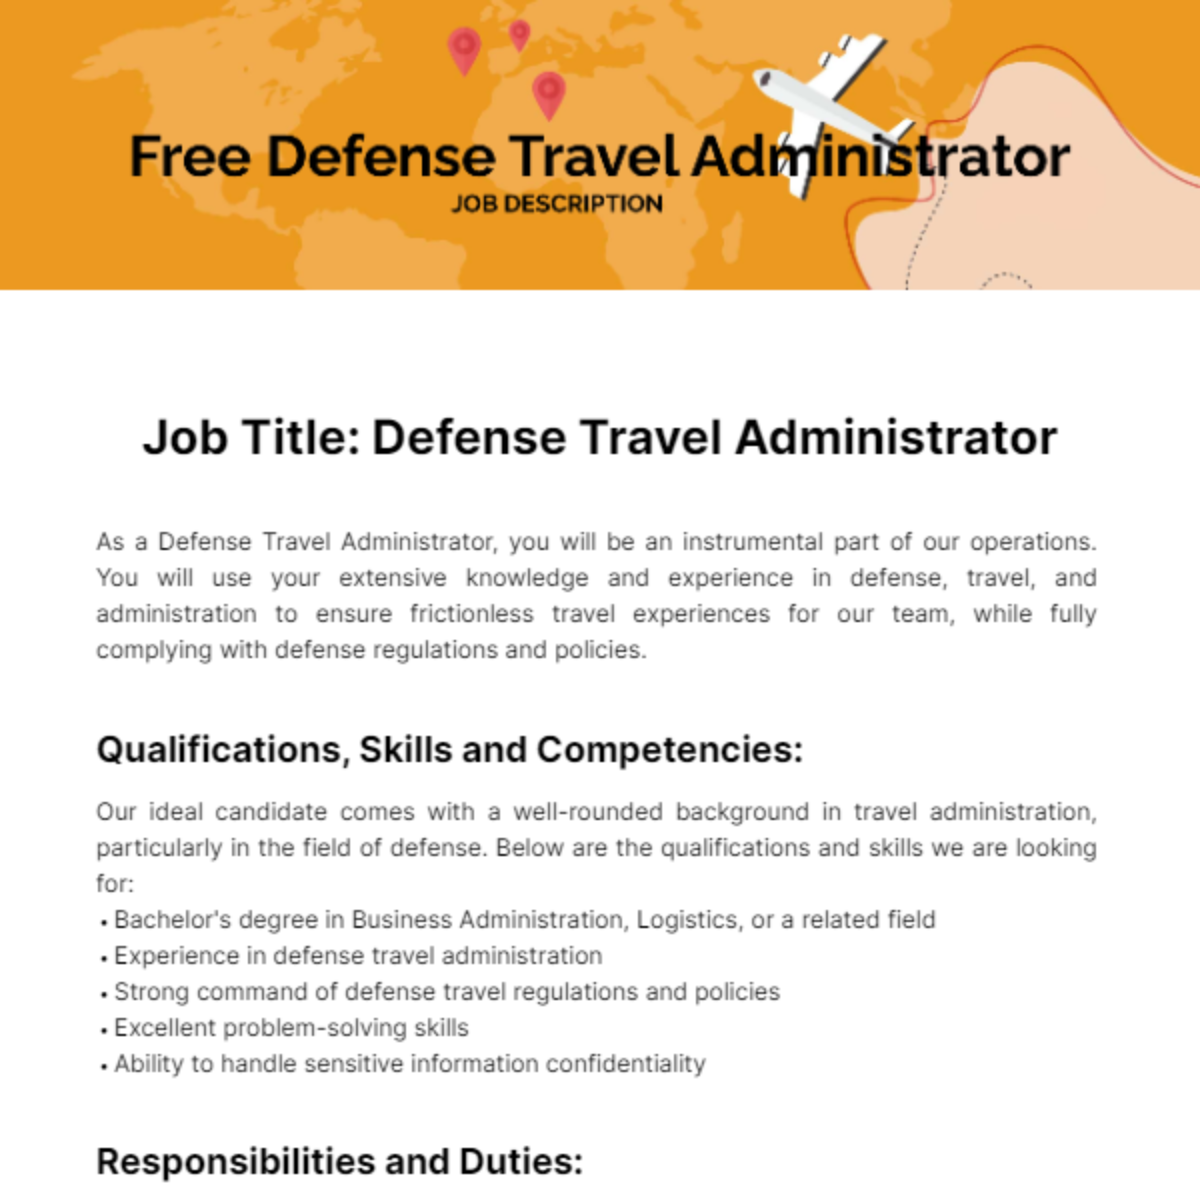 Free Defense Travel Administrator Job Description Template